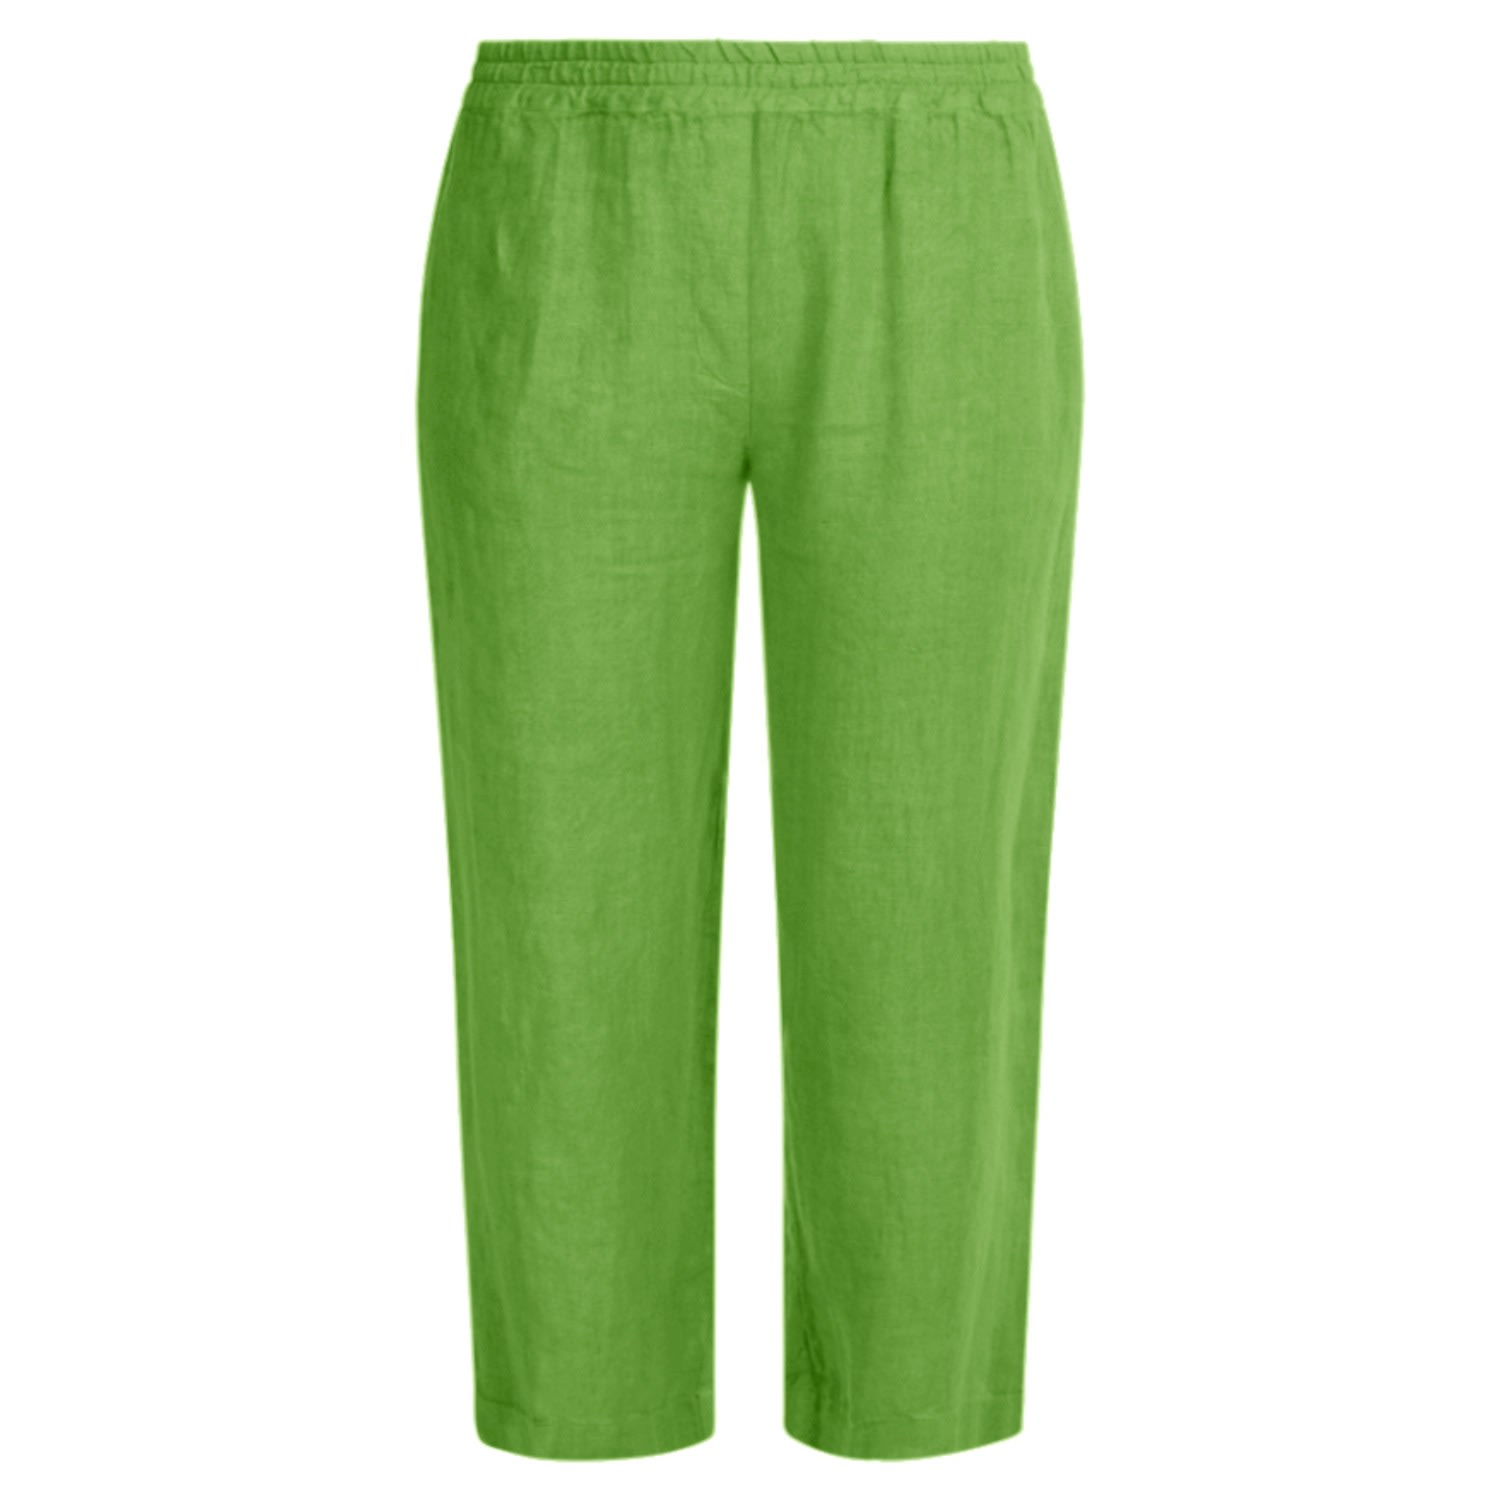 Haris Cotton Women's Green Cropped Linen Pants - Avocado